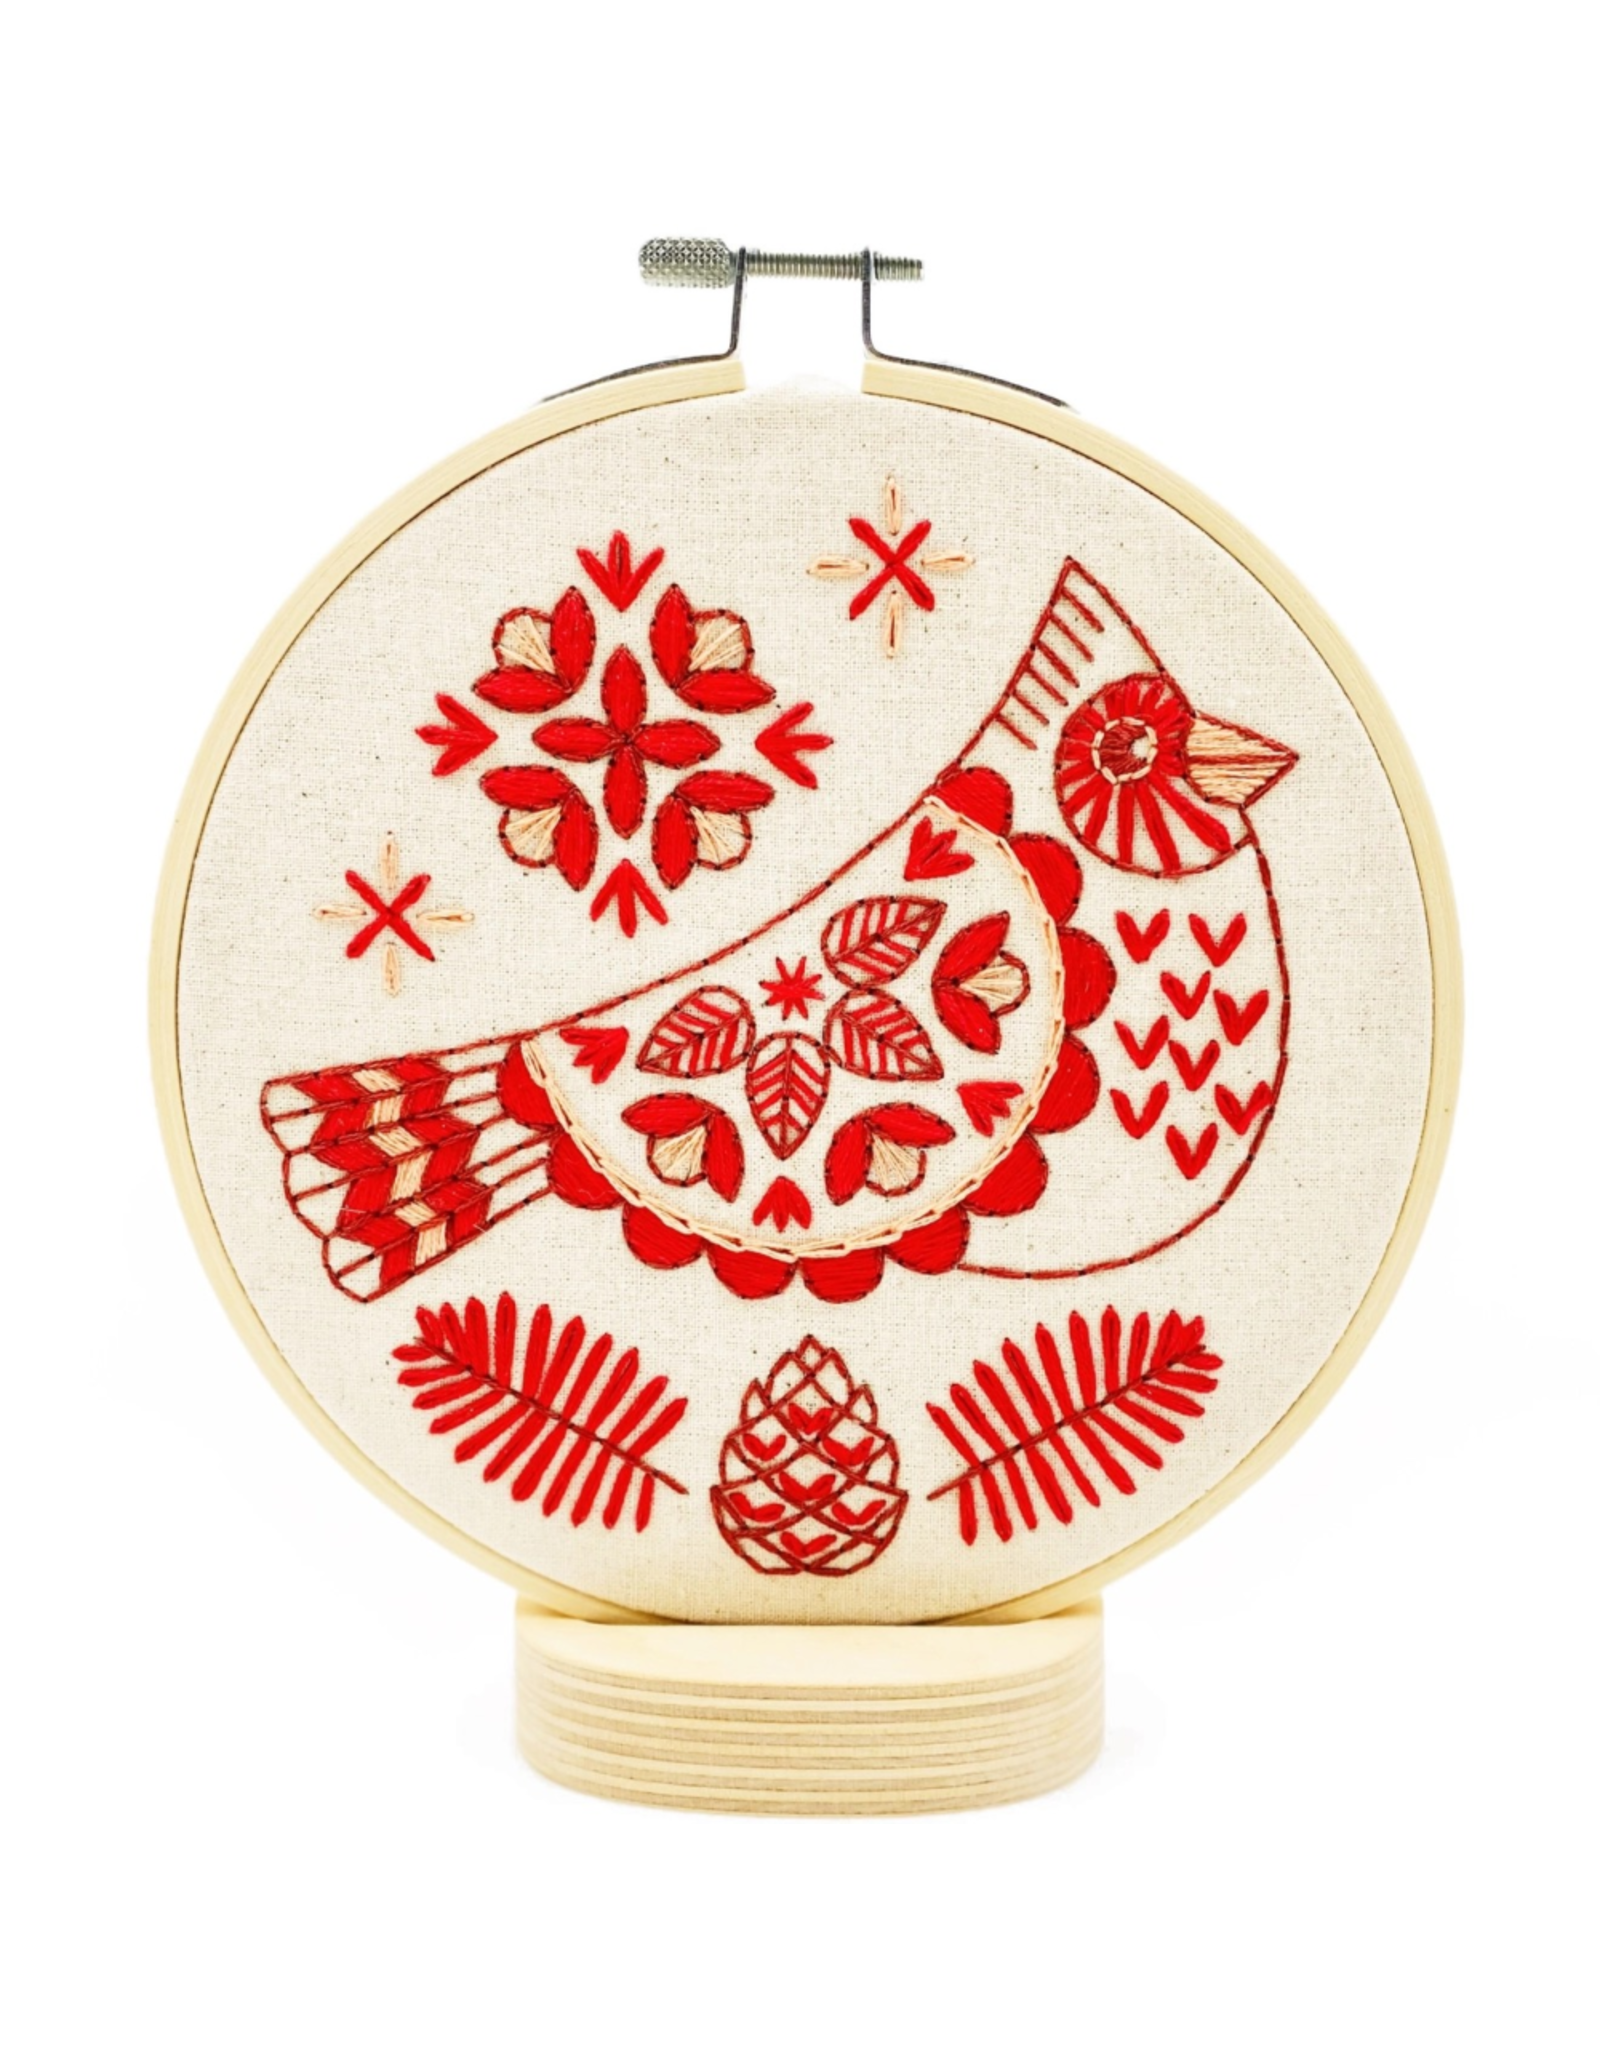 Hook, Line & Tinker Folk Cardinal,  Embroidery Kit